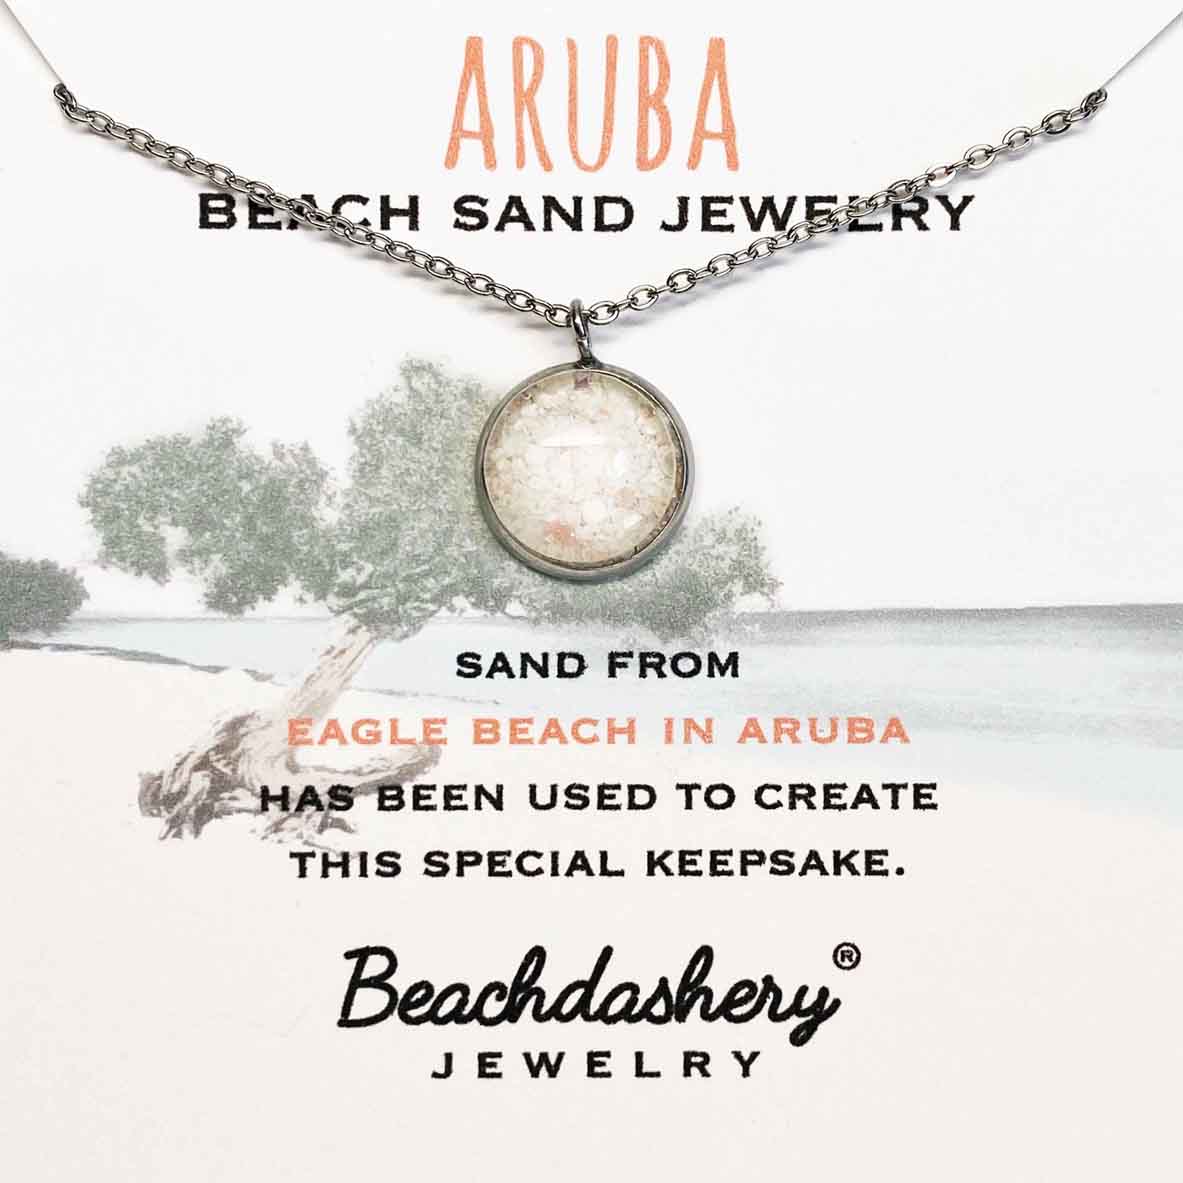 Aruba Beach Sand Jewelry Beachdashery® Jewelry